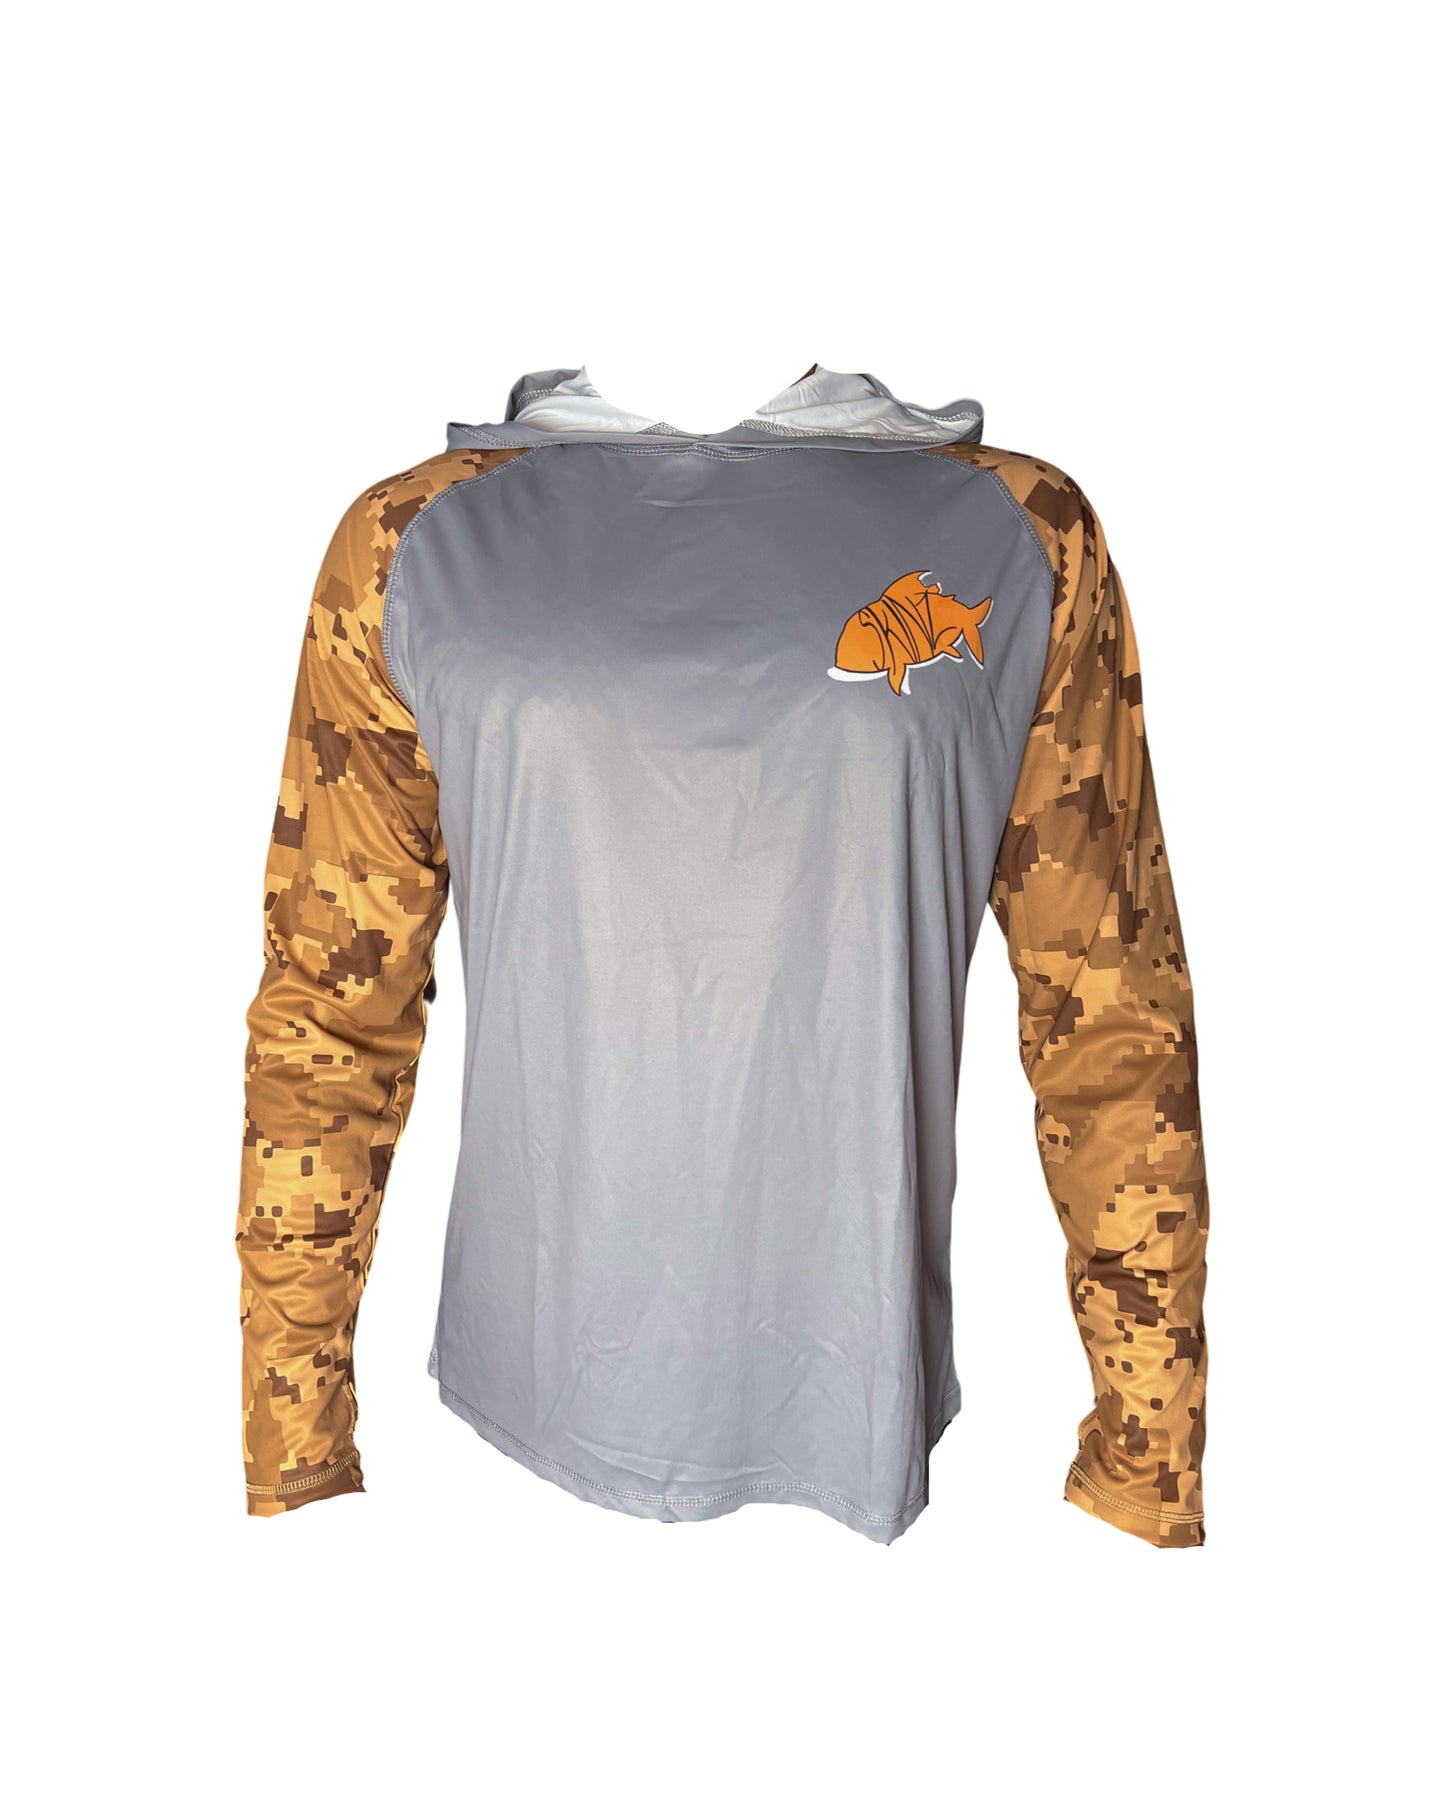 Shry Men's Fishing Apparel Sunscreen Sportwear Long Sleeve Breathable  Uv Clothing Outdoor Sports Fishing Shirts Camisa De Pesca Shry